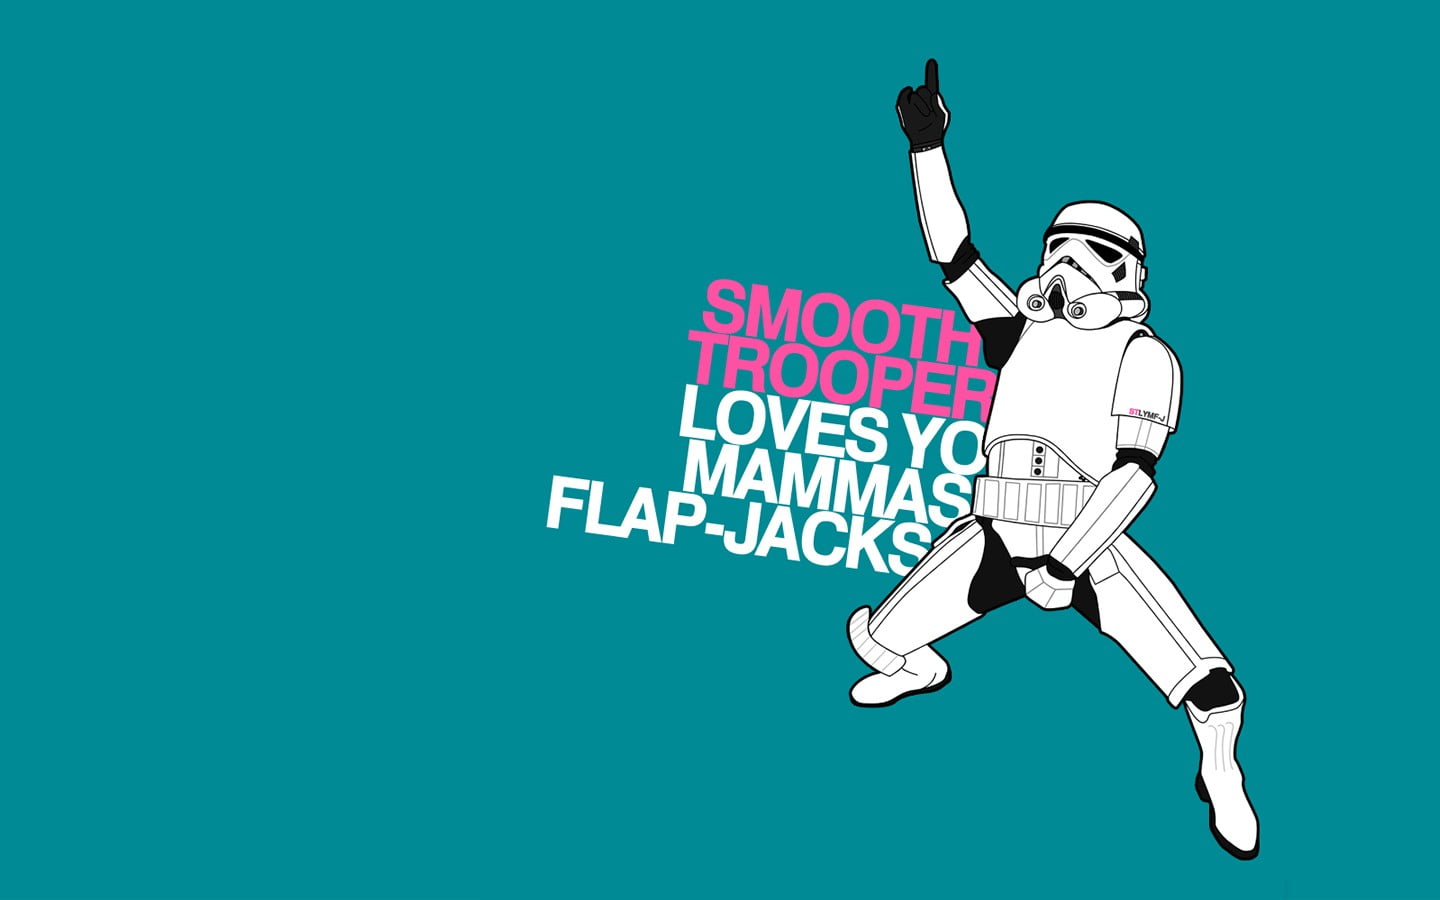 Star Wars storm trooper wallpaper, Star Wars, stormtrooper